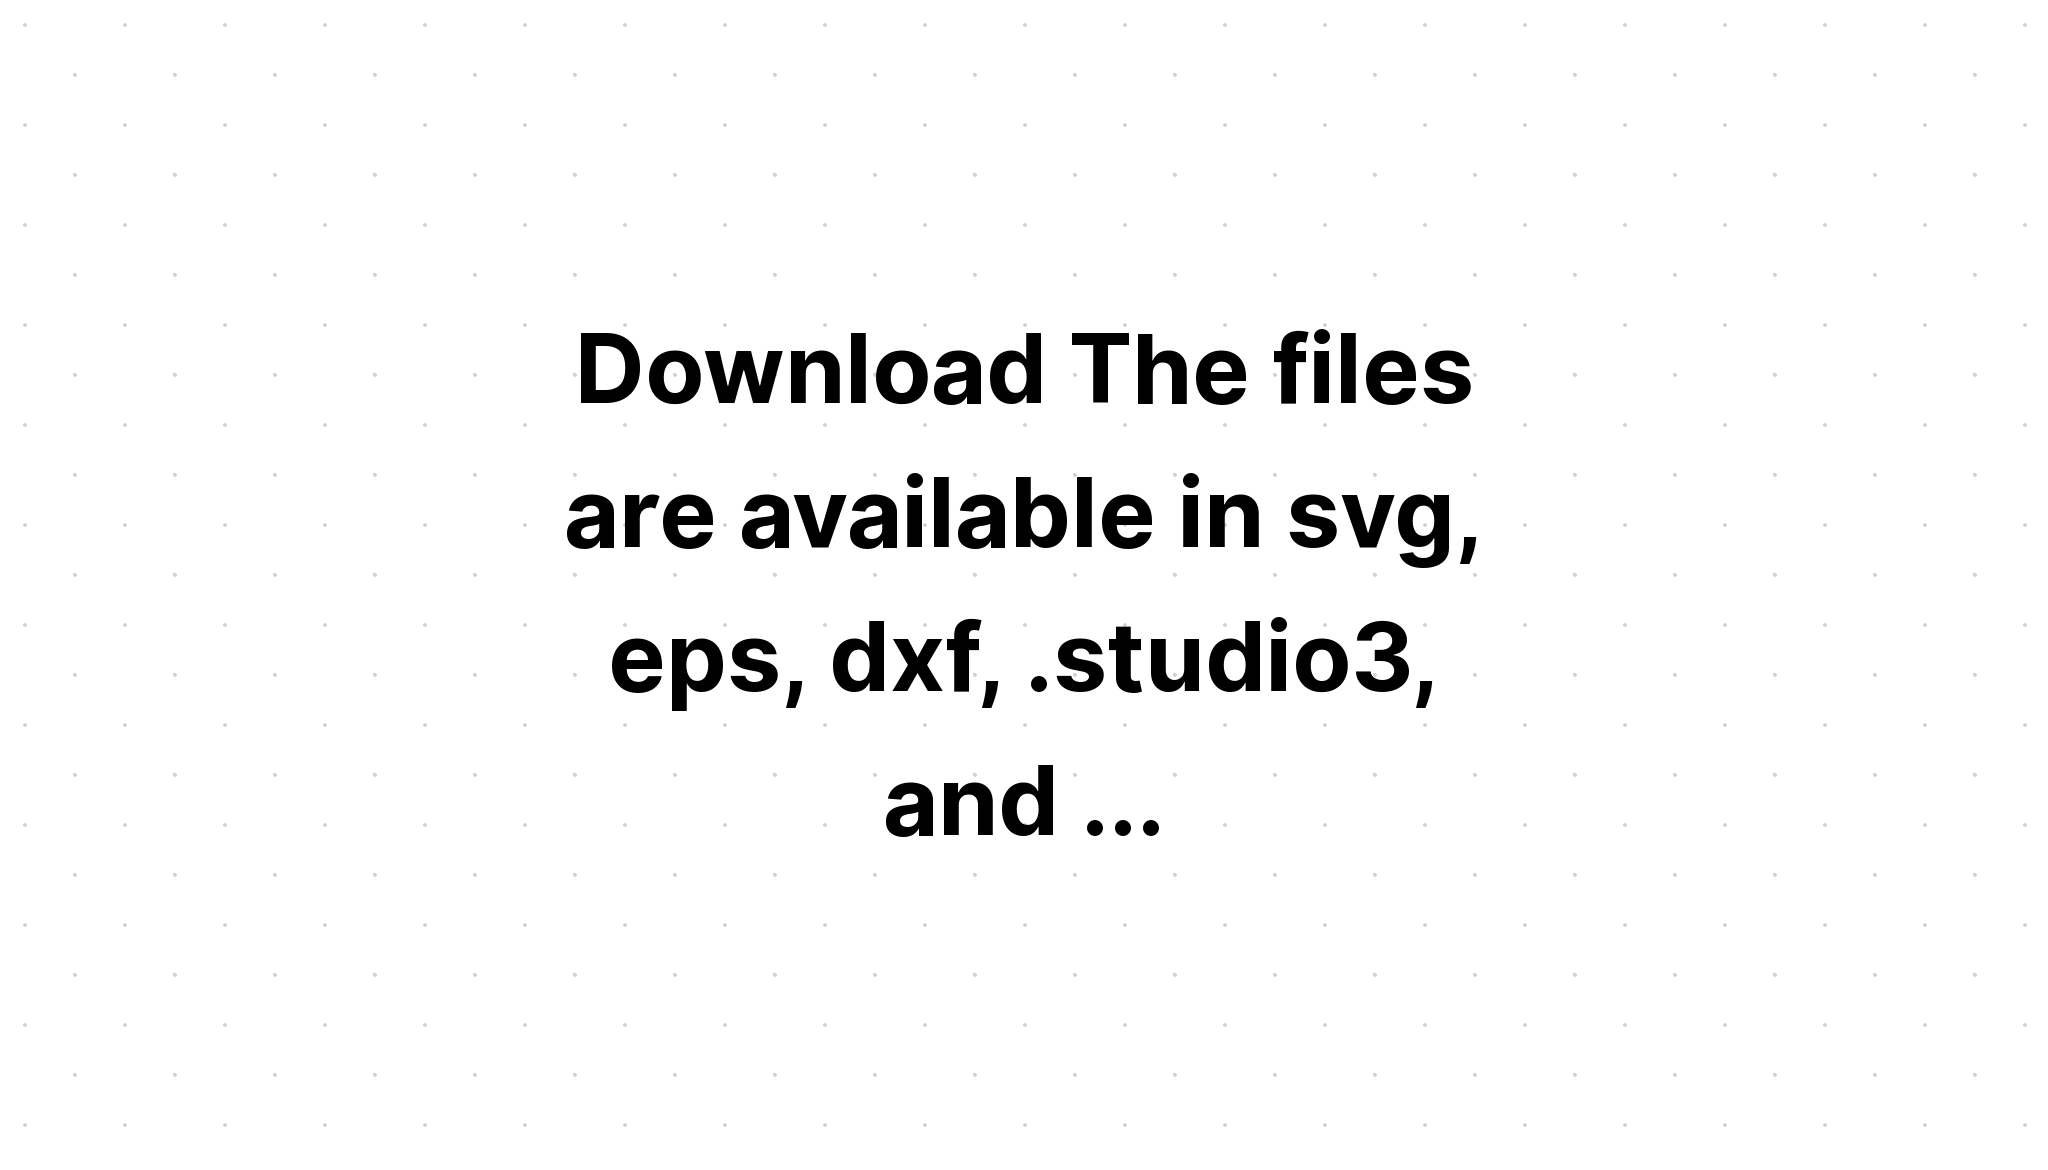 Download Free Rv Svg Cut Files - Layered SVG Cut File